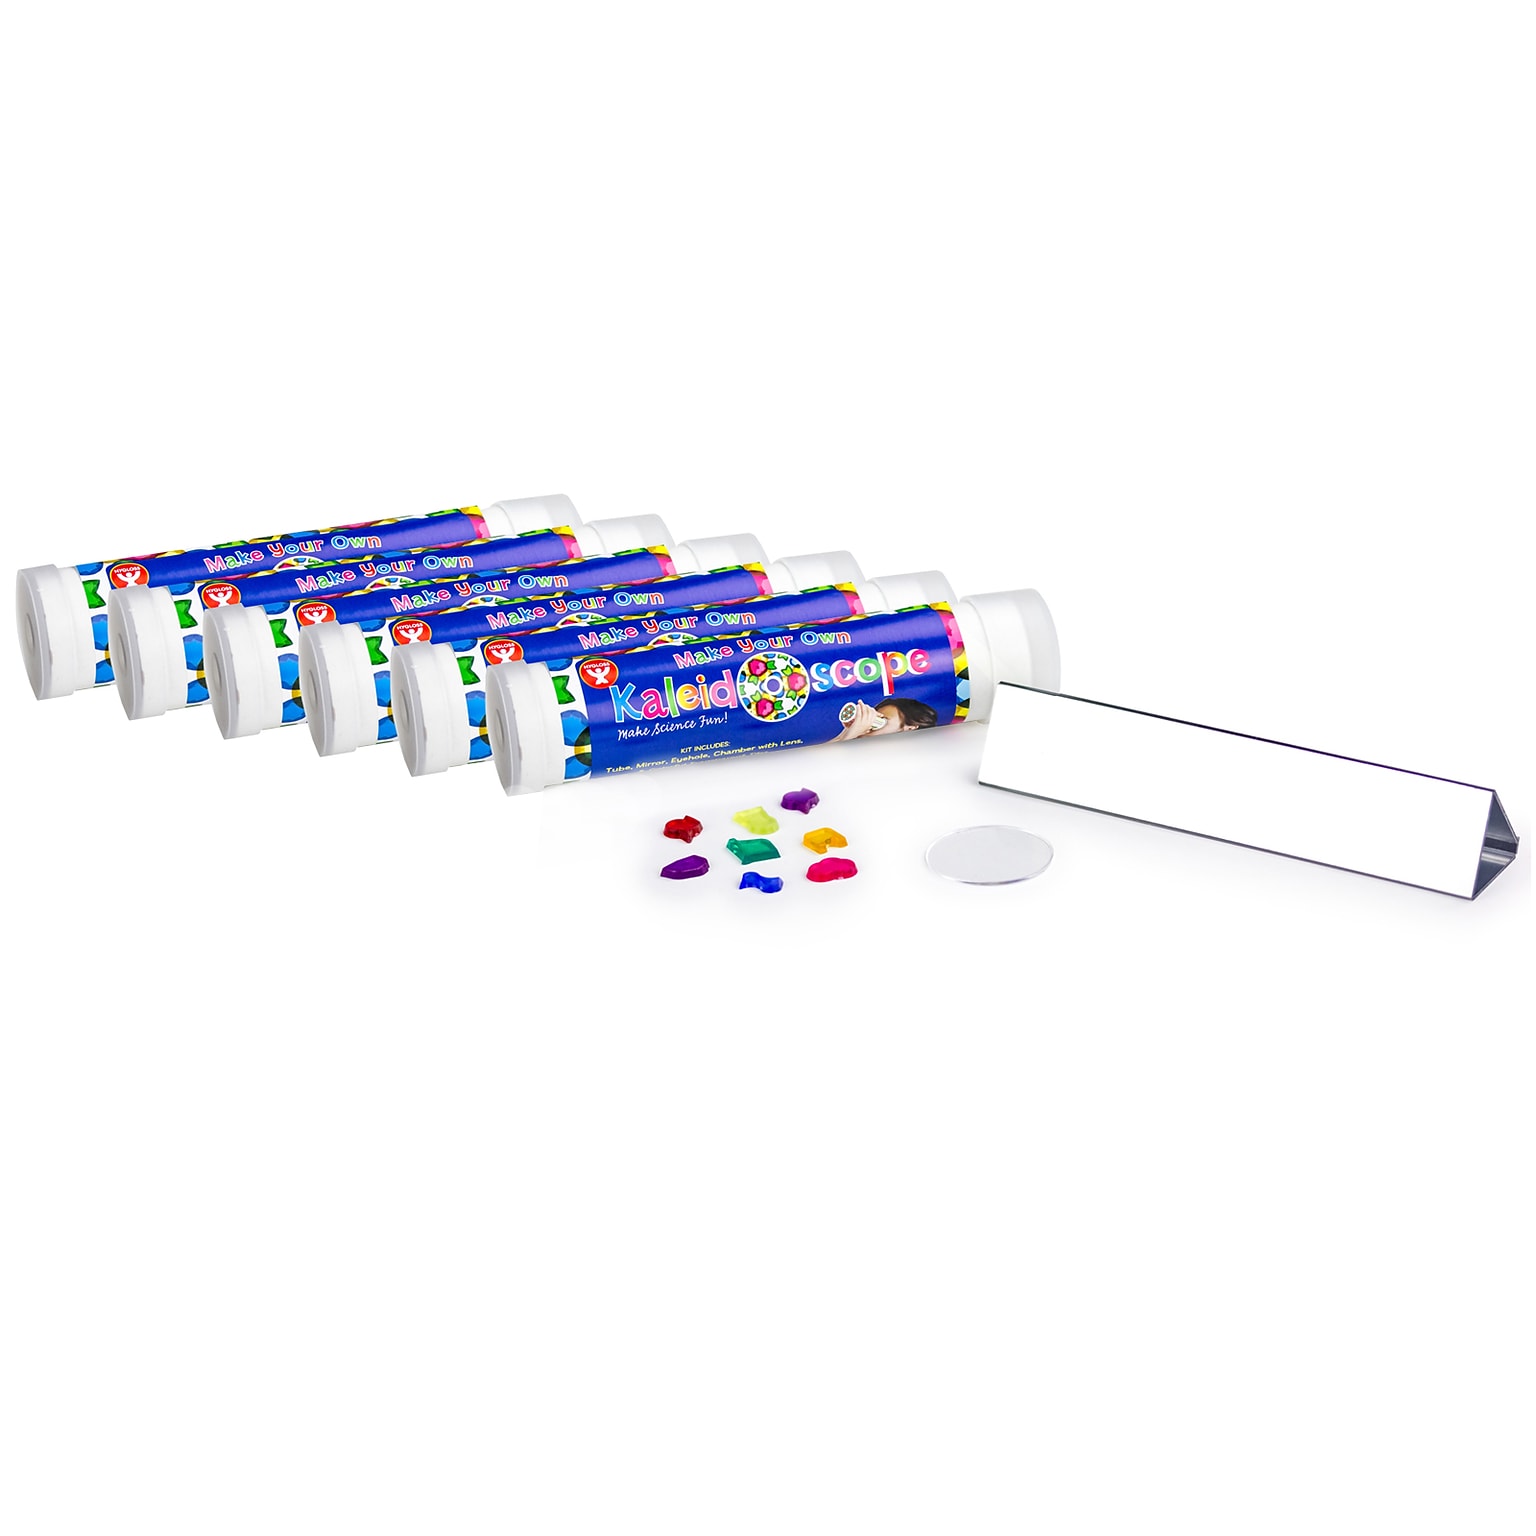 Hygloss Make-Your-Own Kaleidoscope Kit, Multicolored, 6 Kits (HYG59921-6)